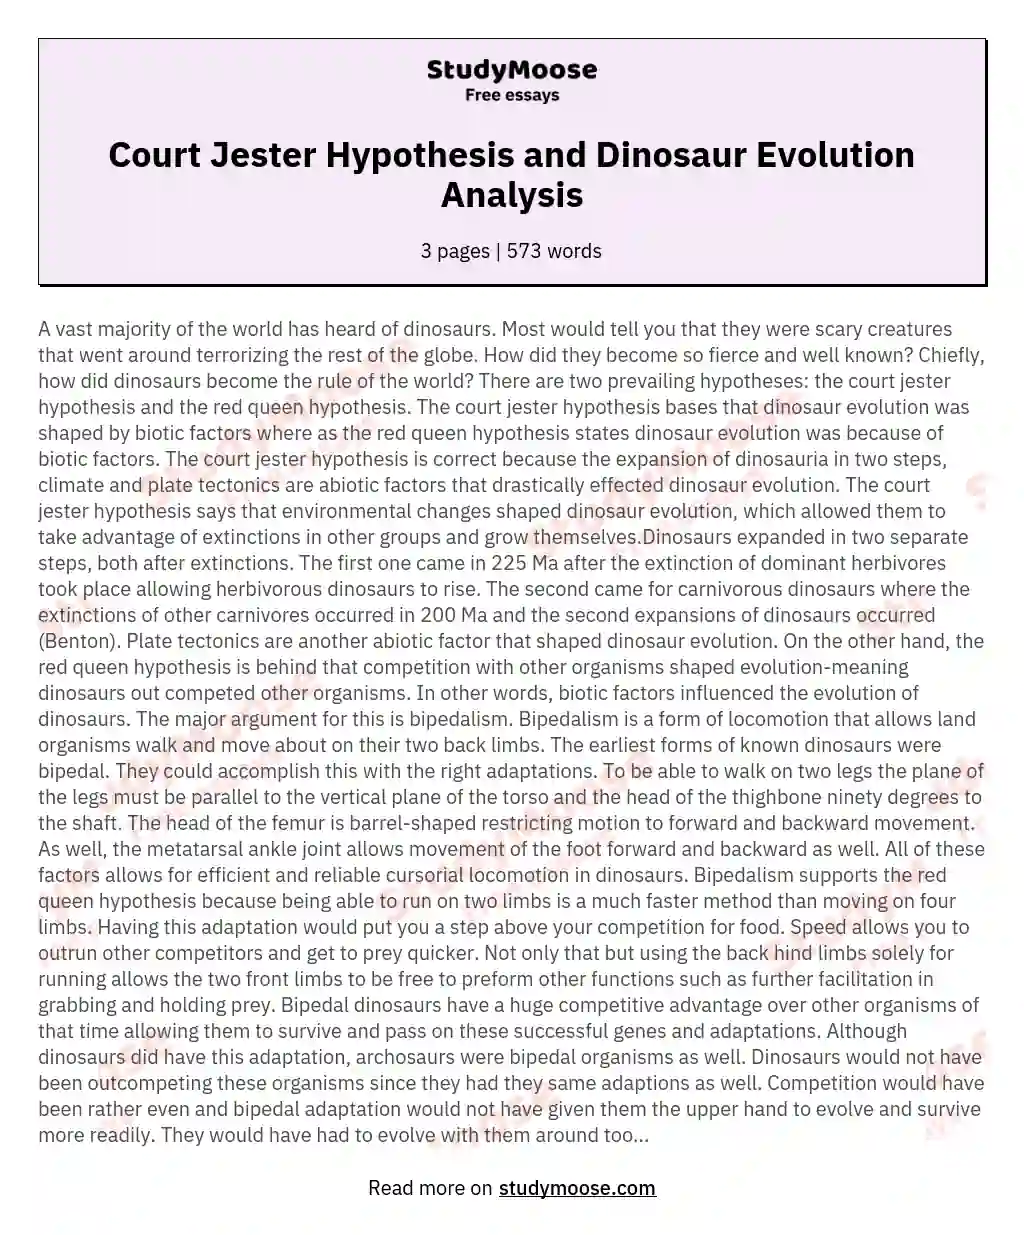 Court Jester Hypothesis and Dinosaur Evolution Analysis essay